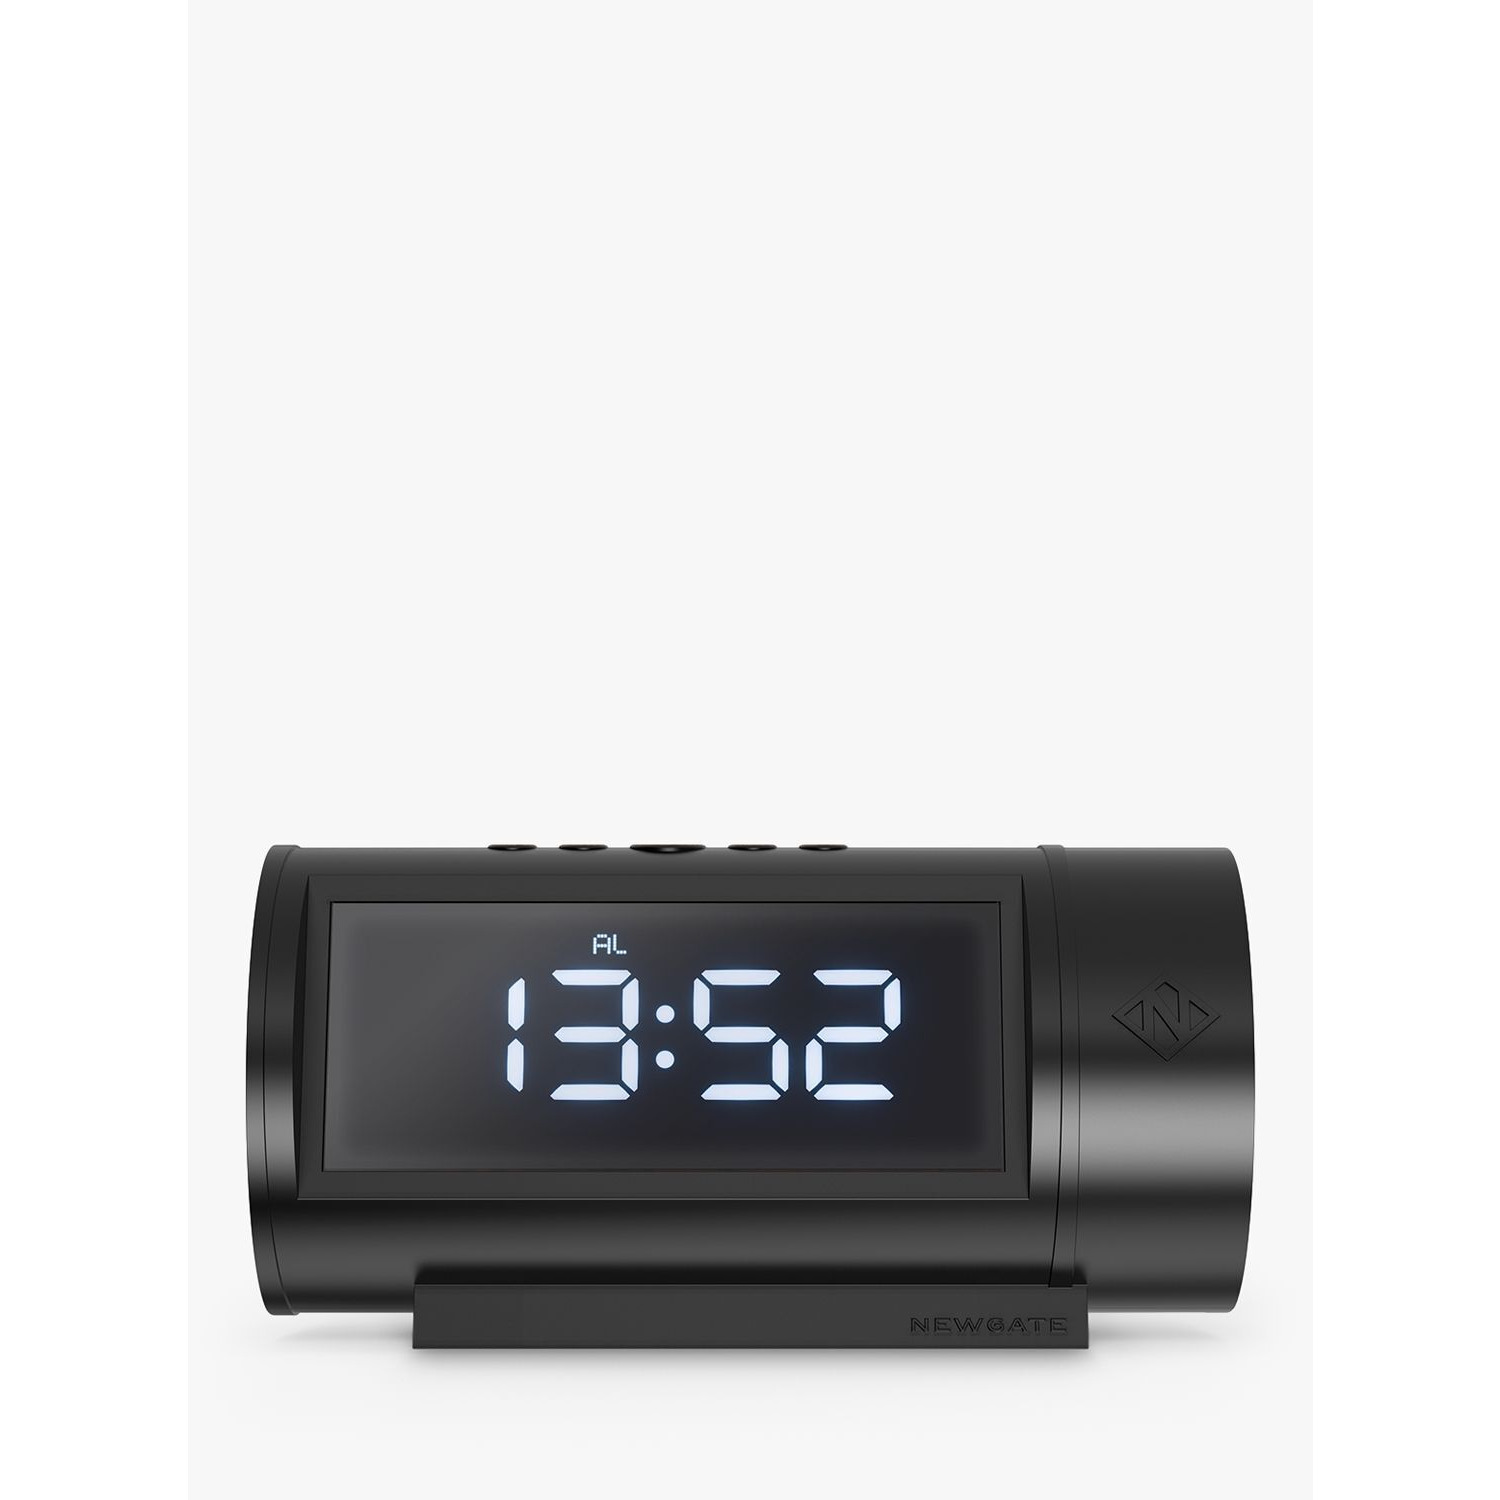 Newgate Clocks Pil LED Digital Alarm Clock, Black - image 1